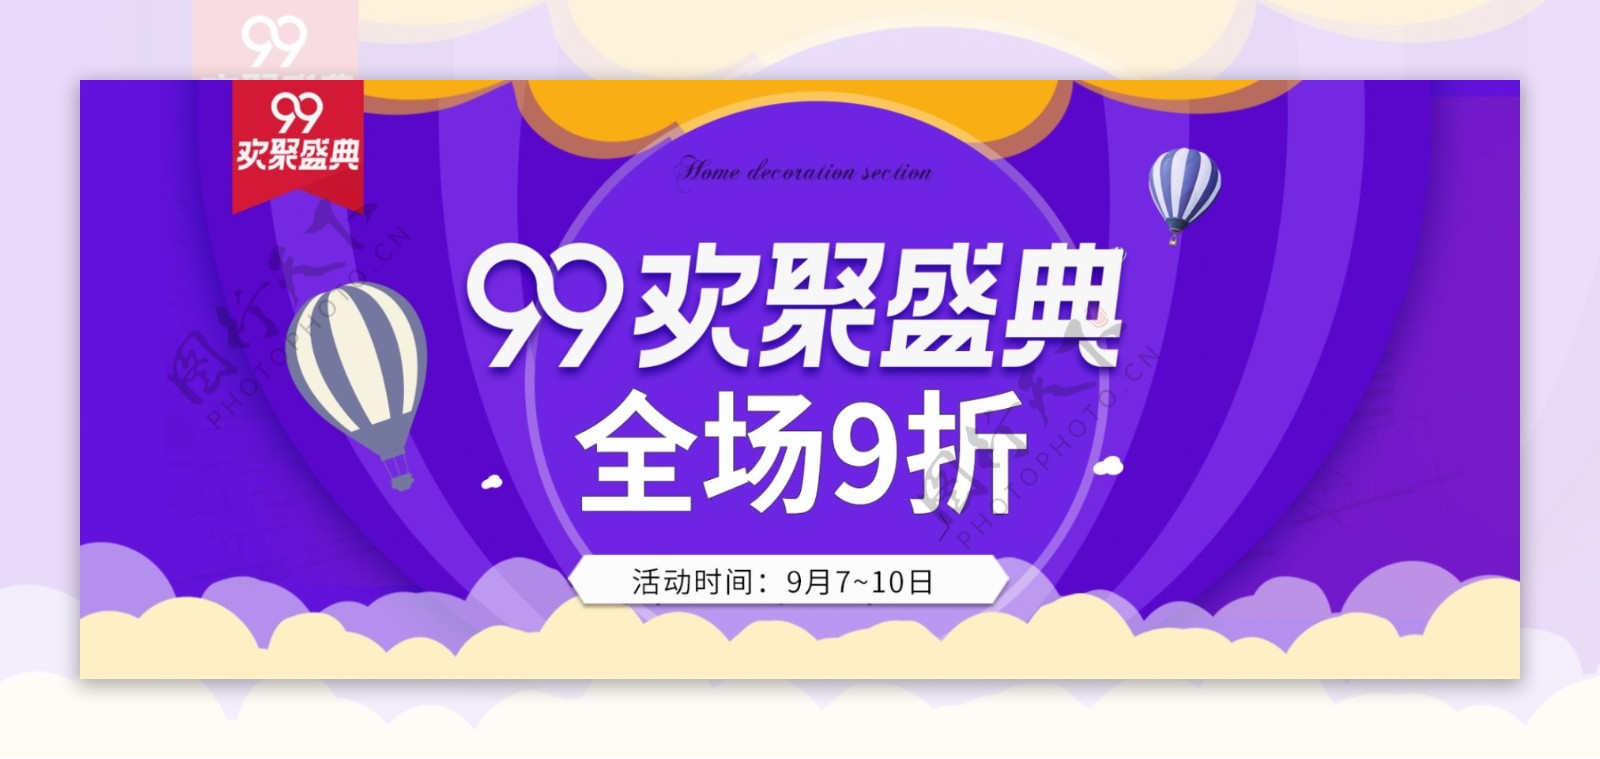 淘宝紫色背景潮流时尚99大促banner